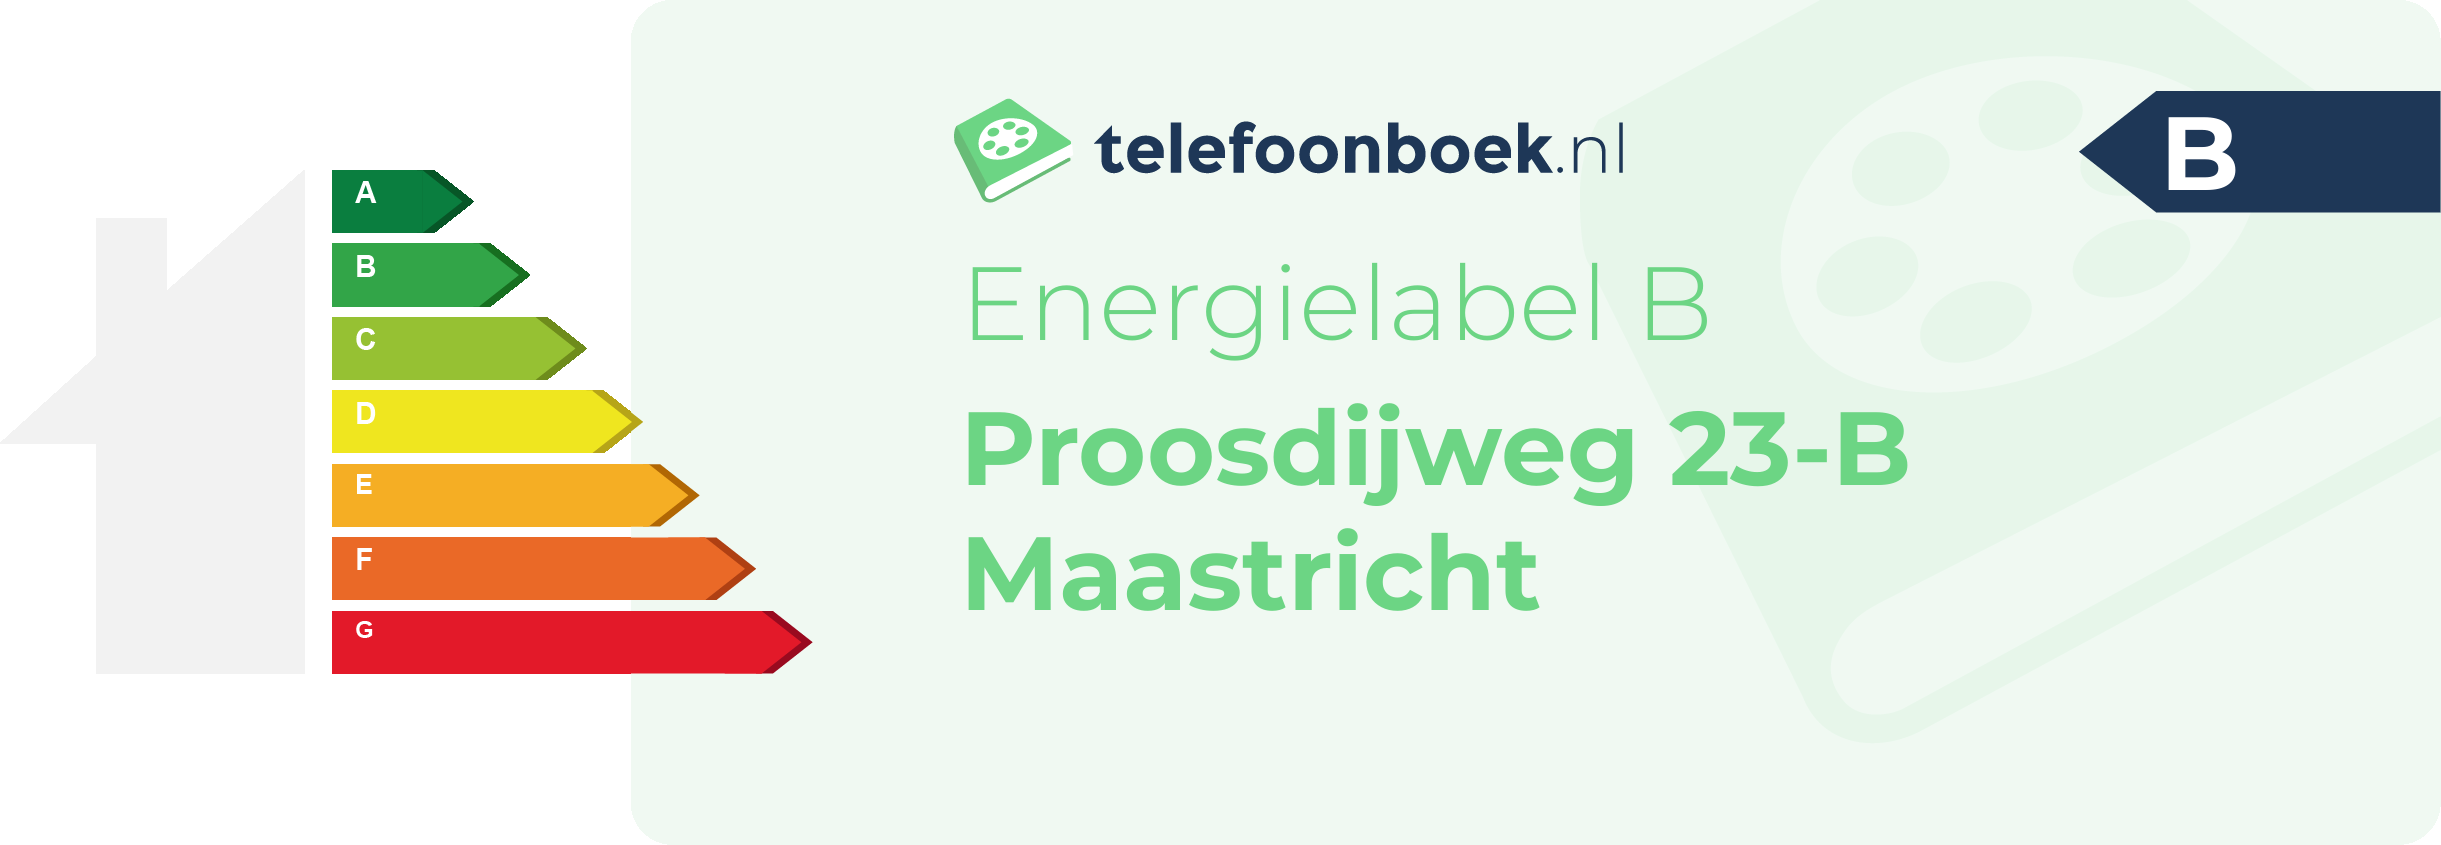 Energielabel Proosdijweg 23-B Maastricht